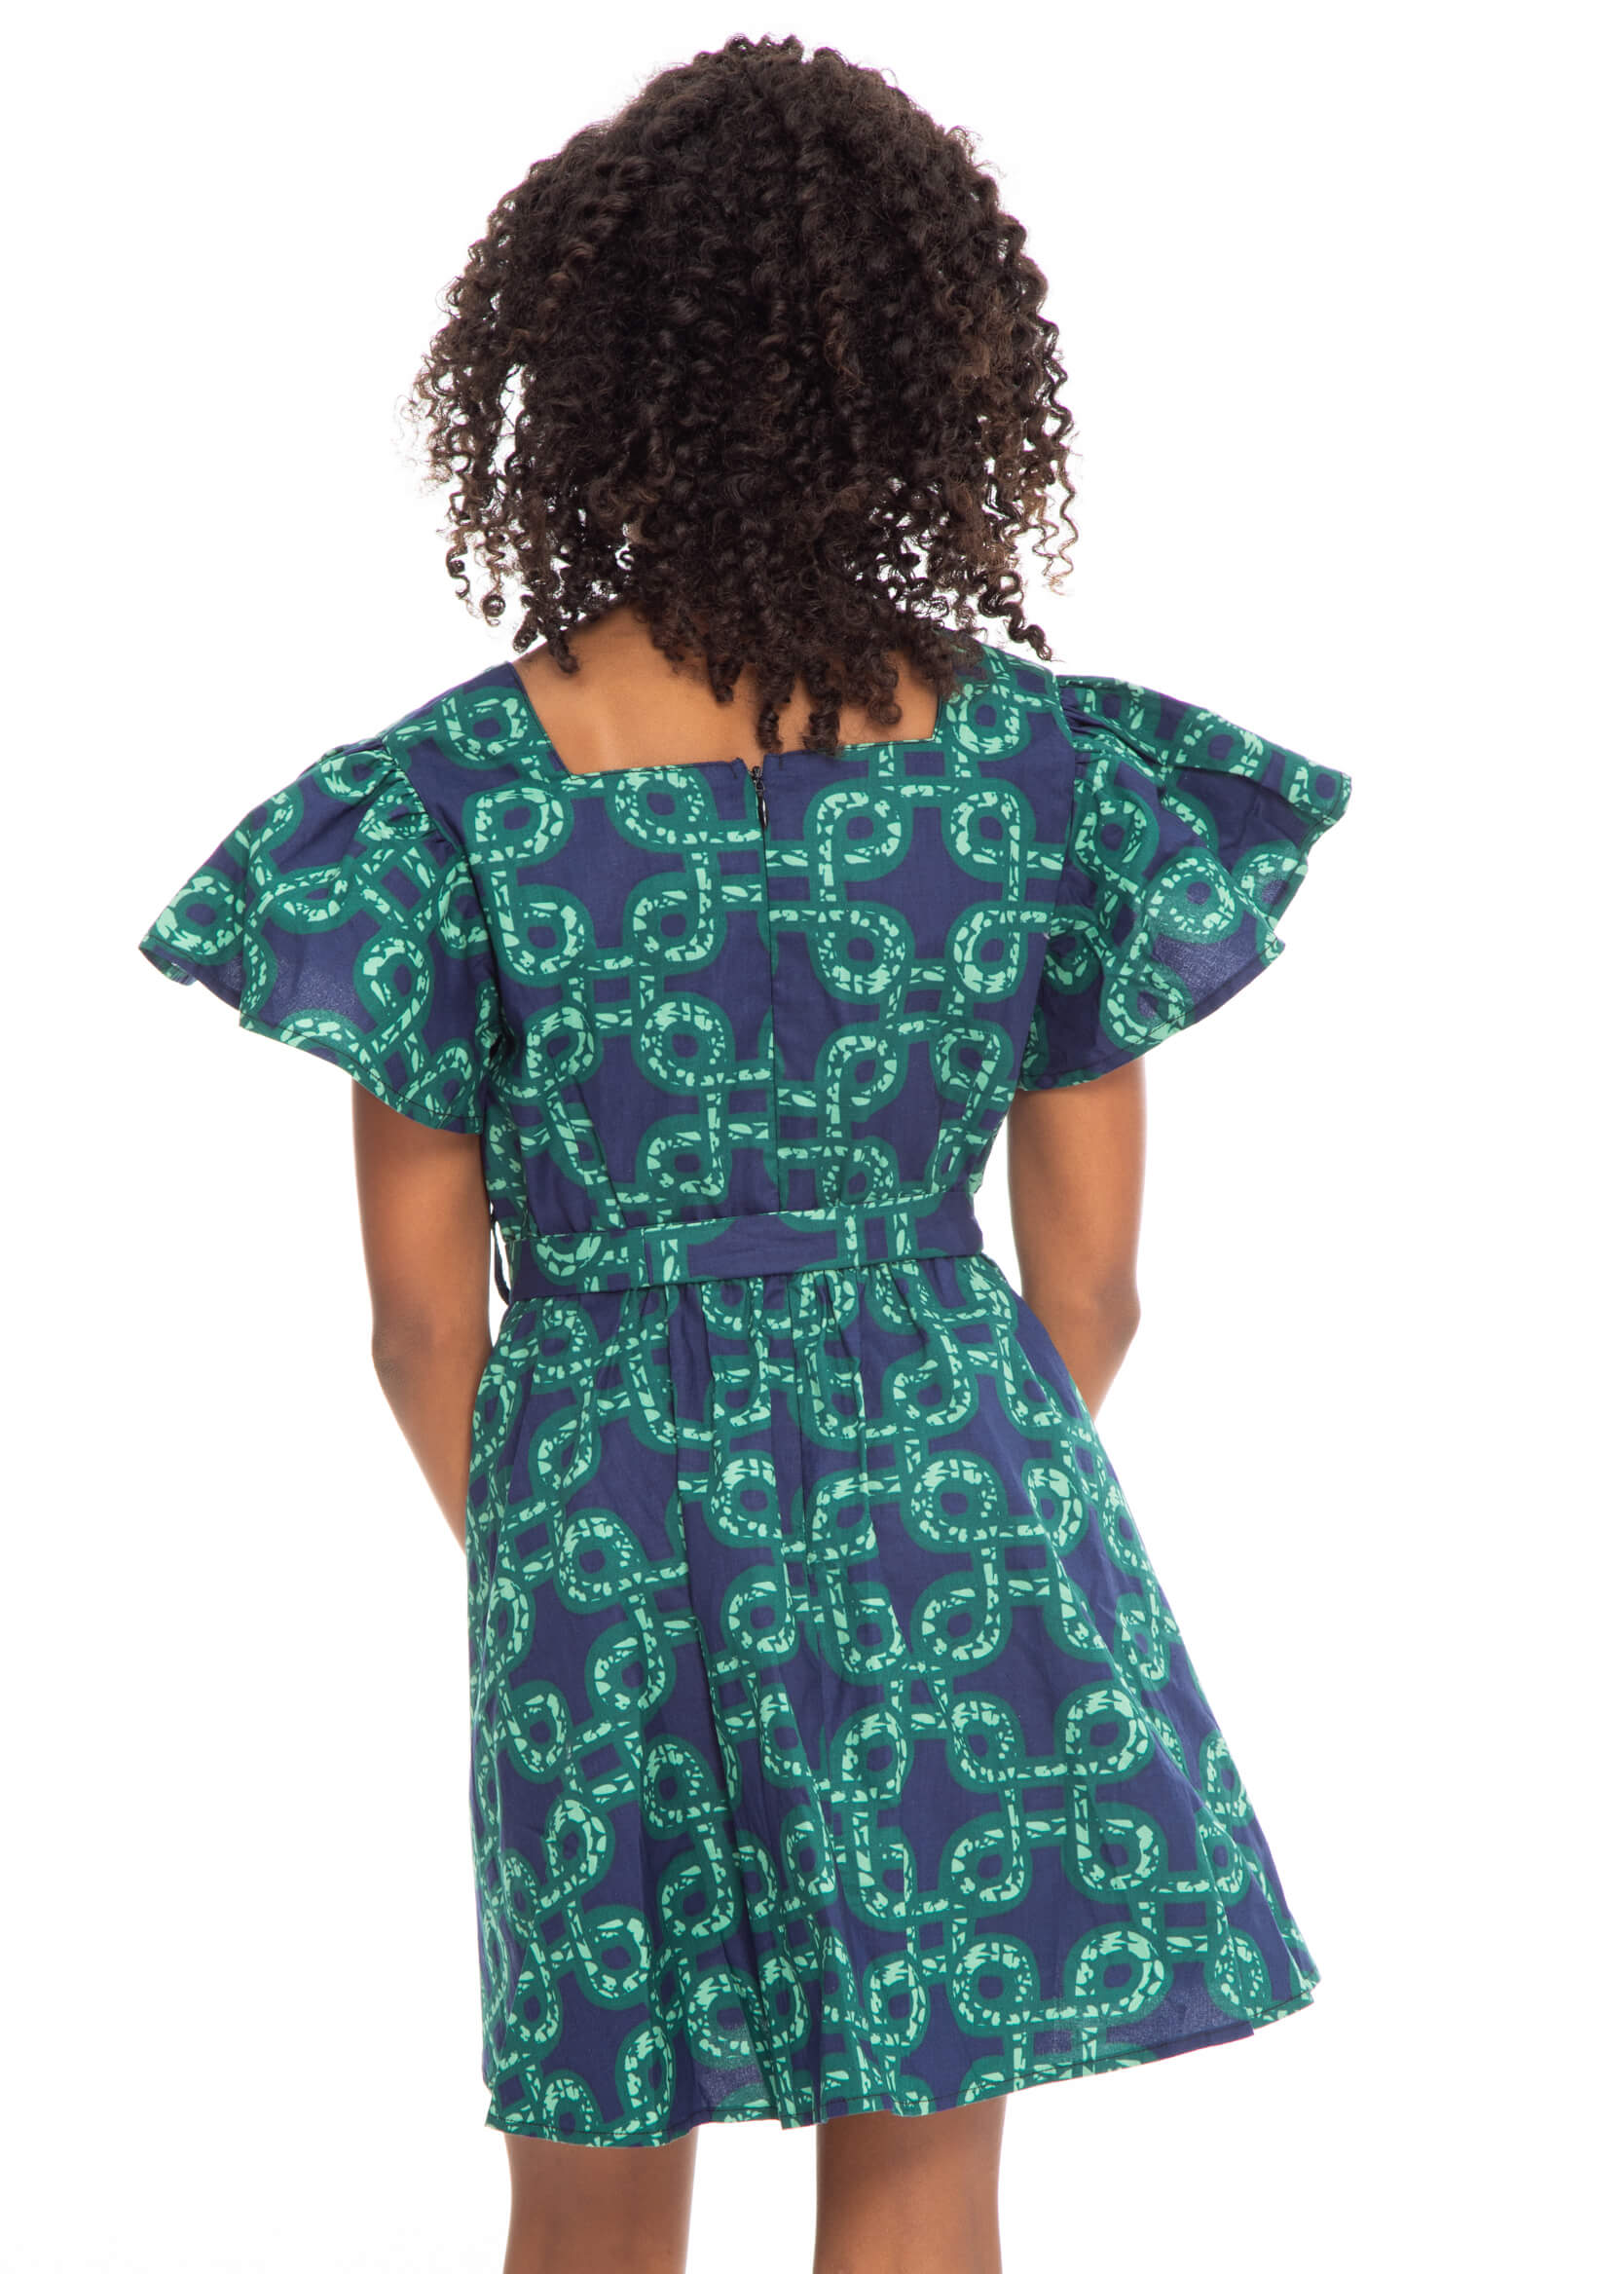 Zawadi African Print Girls' Dress (Green Adinkra)